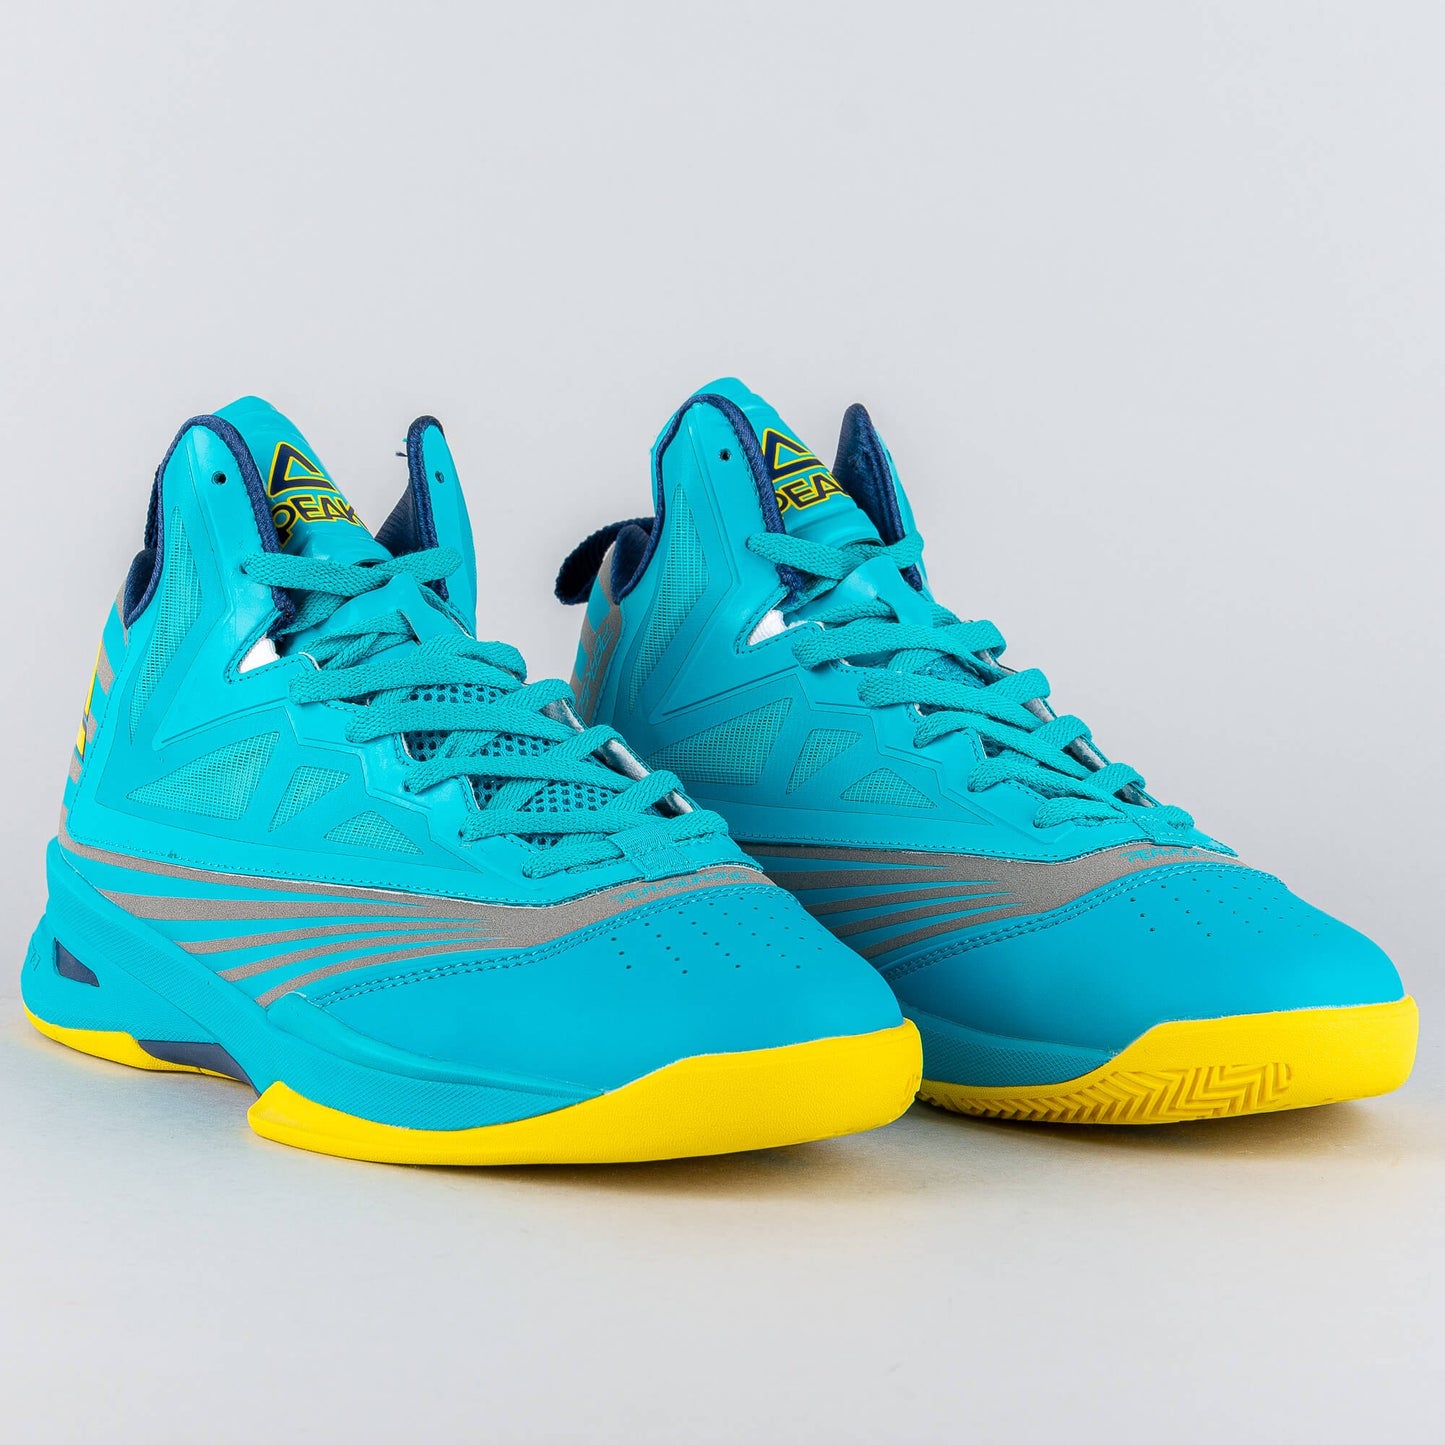 Peak Basketball Shoes Soaring II-7 3M Reflective Blue/Blue